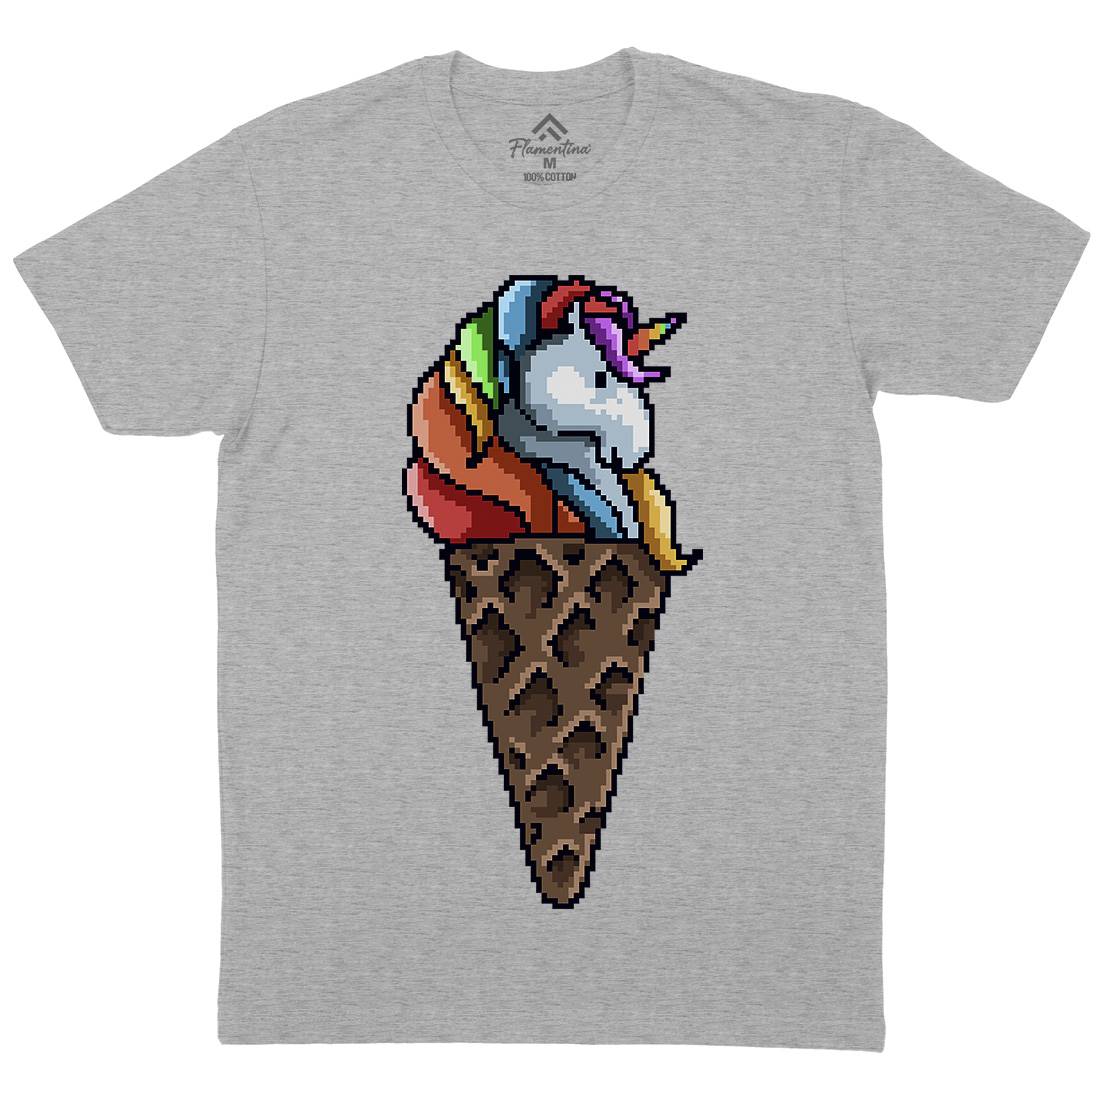 Unicorn Cone Mens Crew Neck T-Shirt Food B974